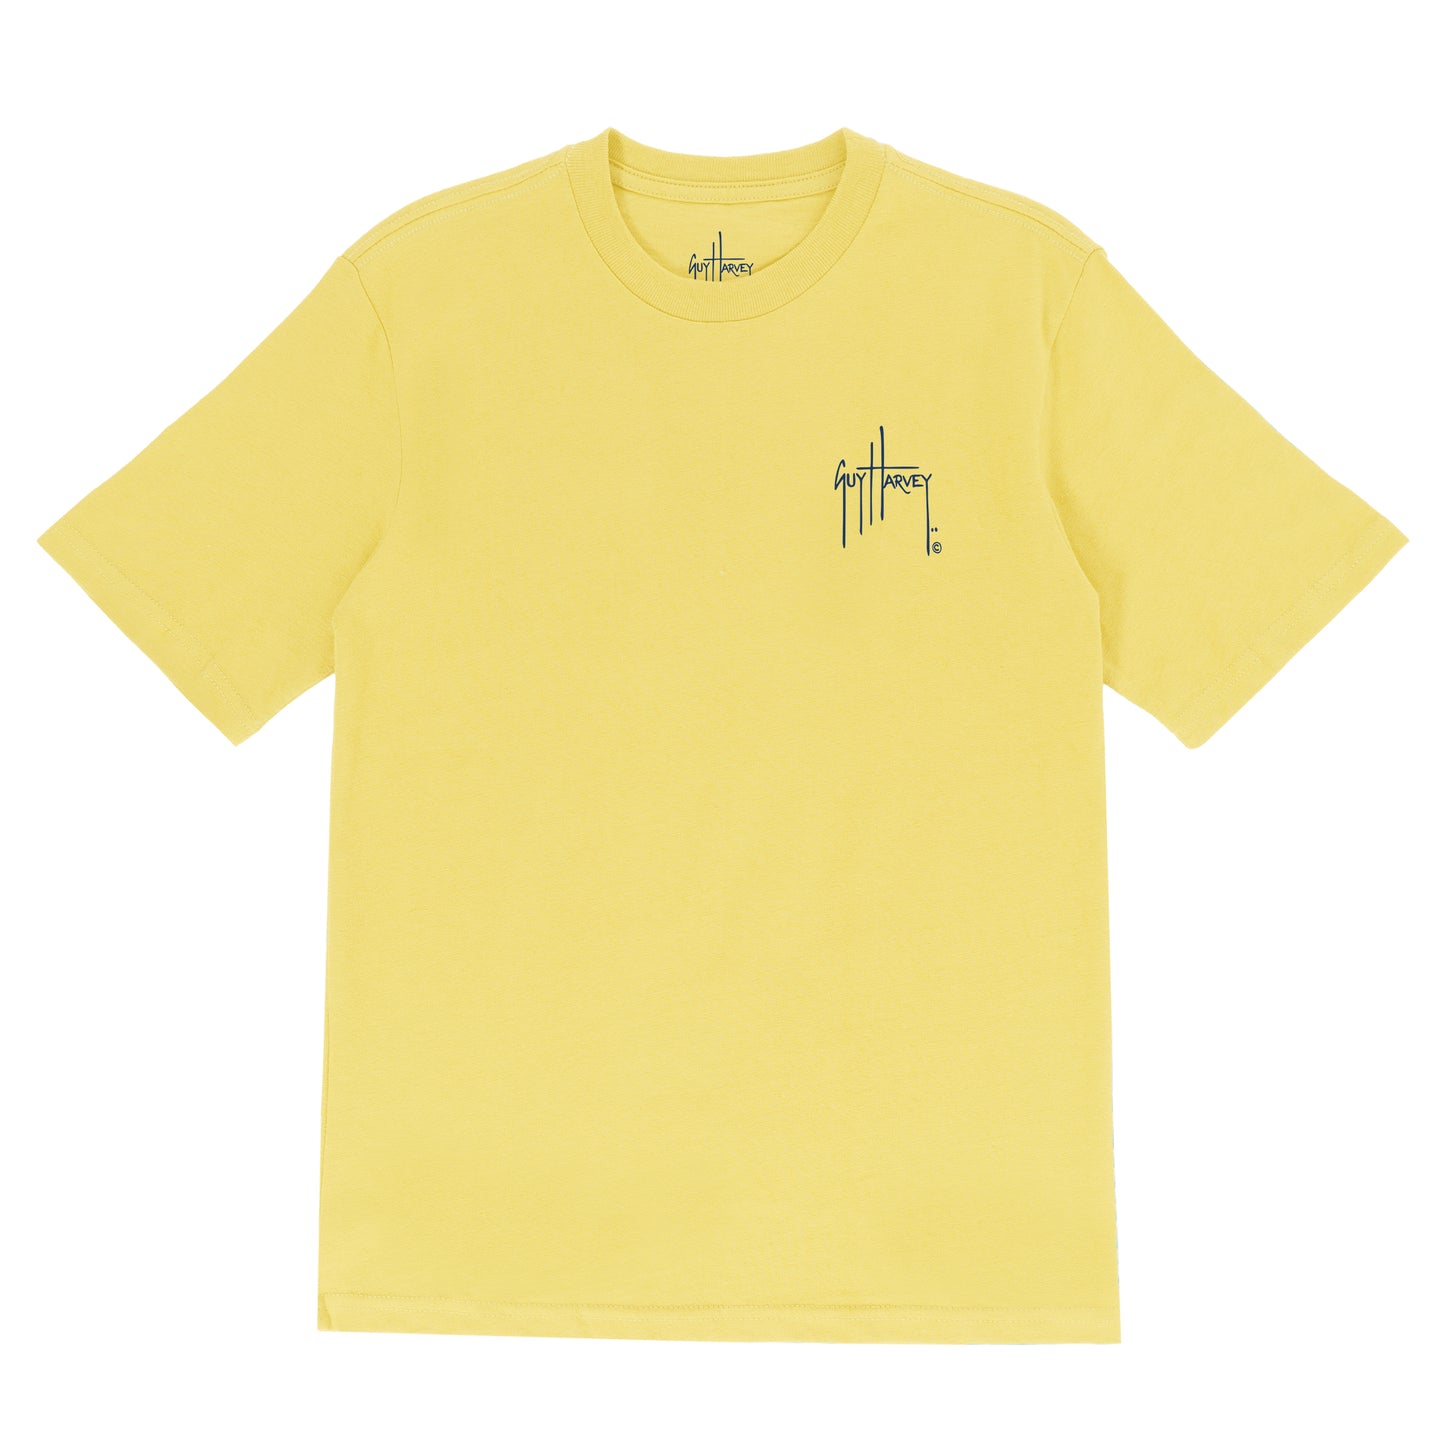 Kids Mahi Madness Short Sleeve Yellow T-Shirt View 3